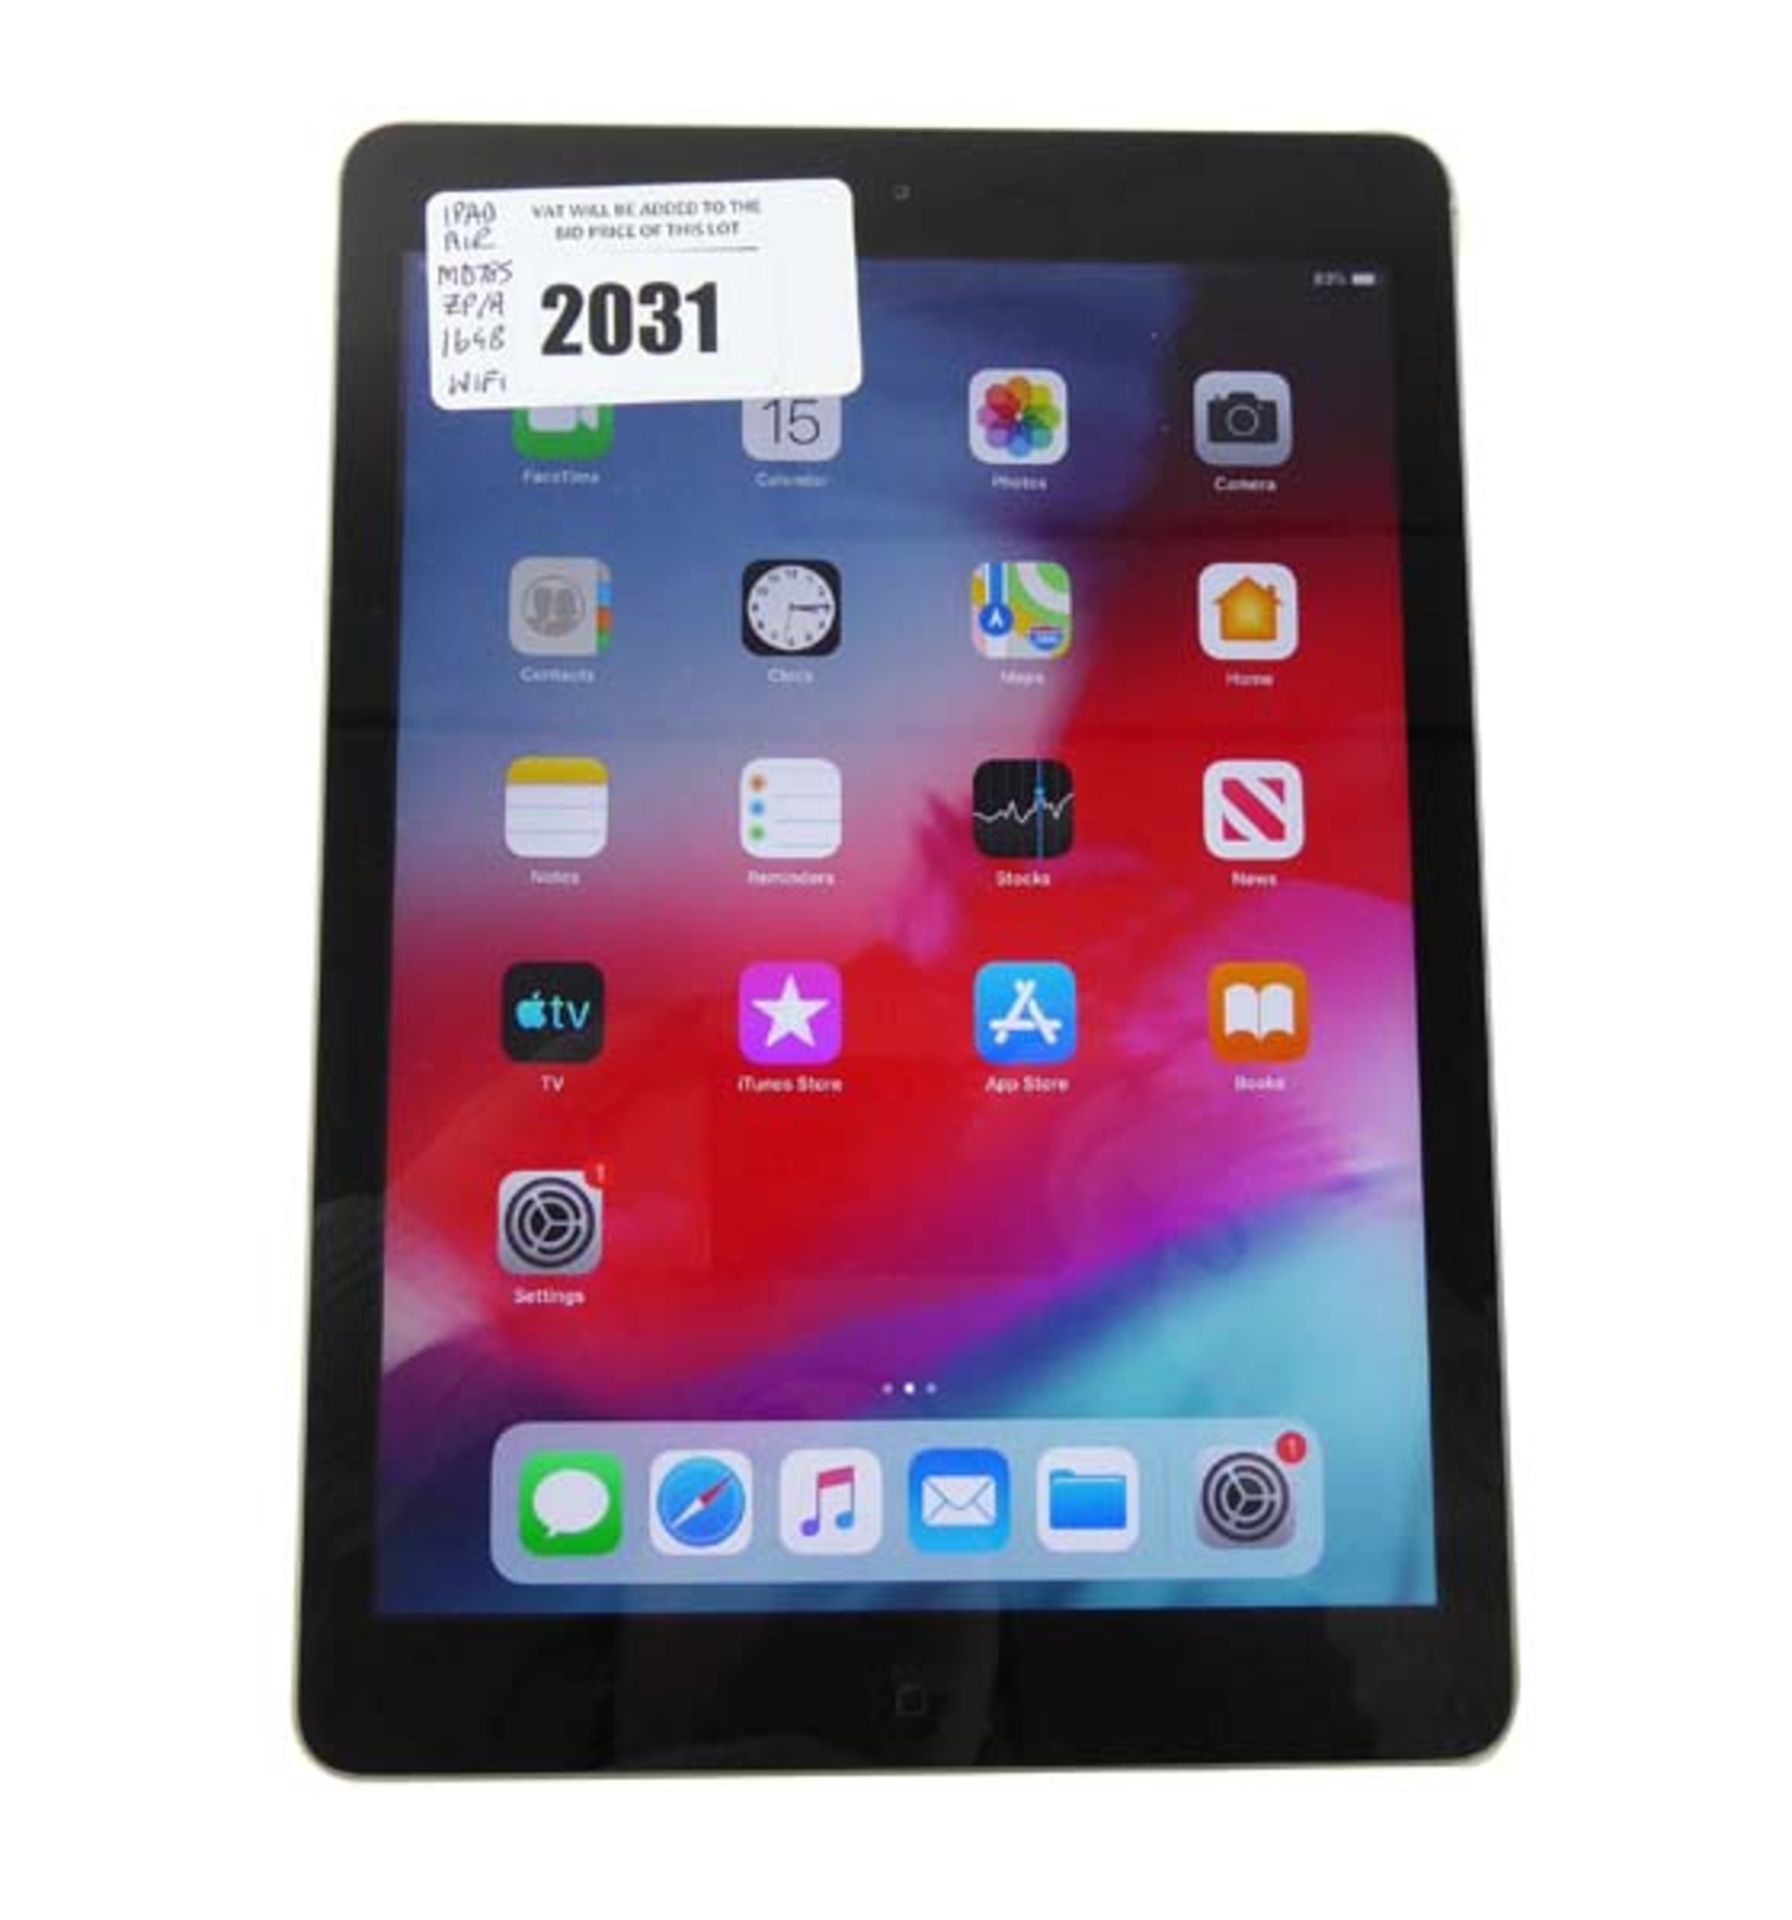 iPad Air 16GB Space Grey tablet (A1474)